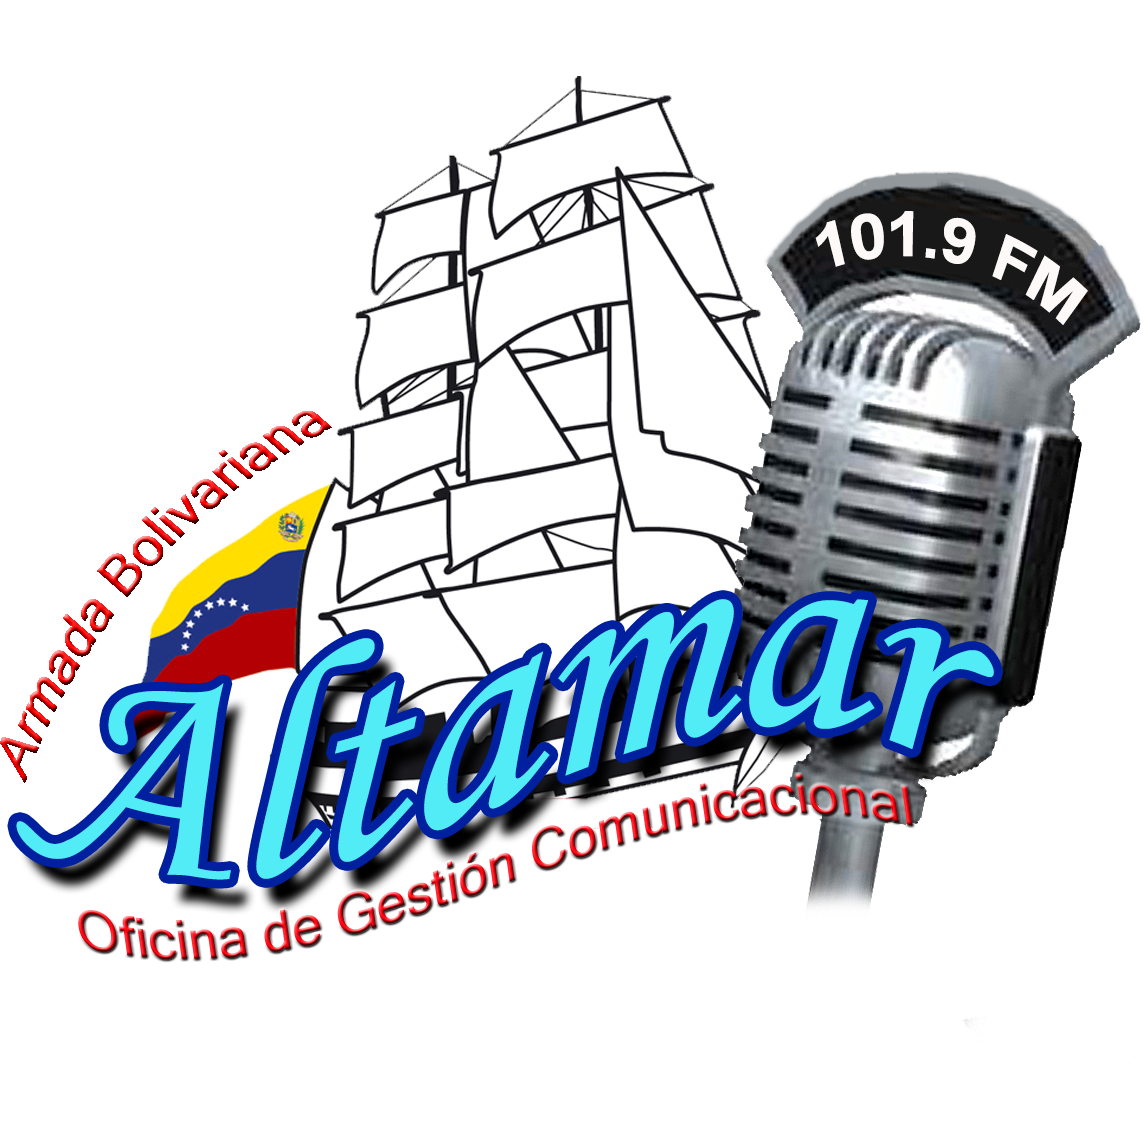 Acuatica RadioOnline